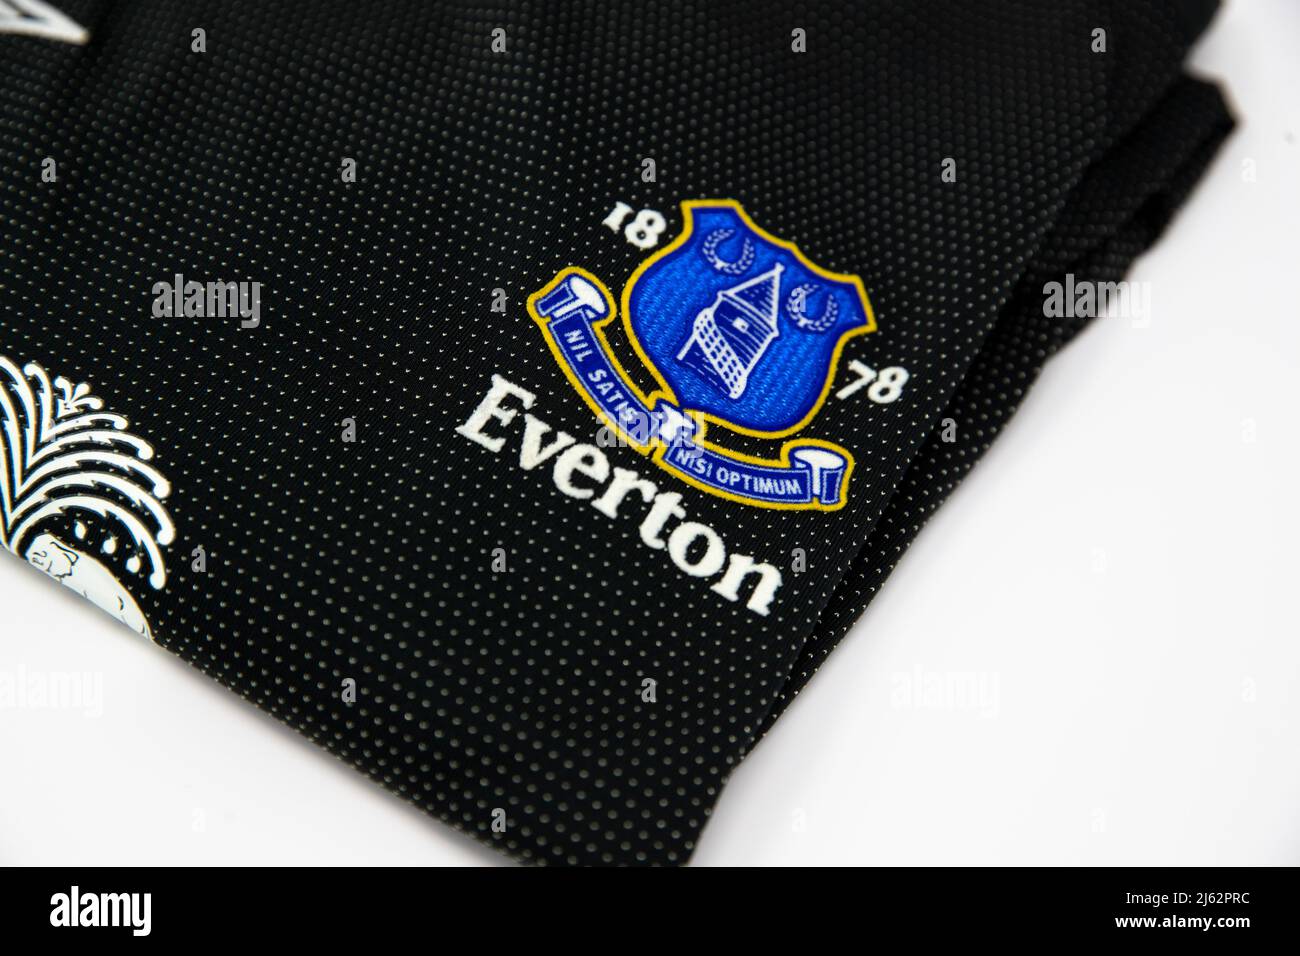 Everton Badge on a black Umbro football shirt Stock Photo